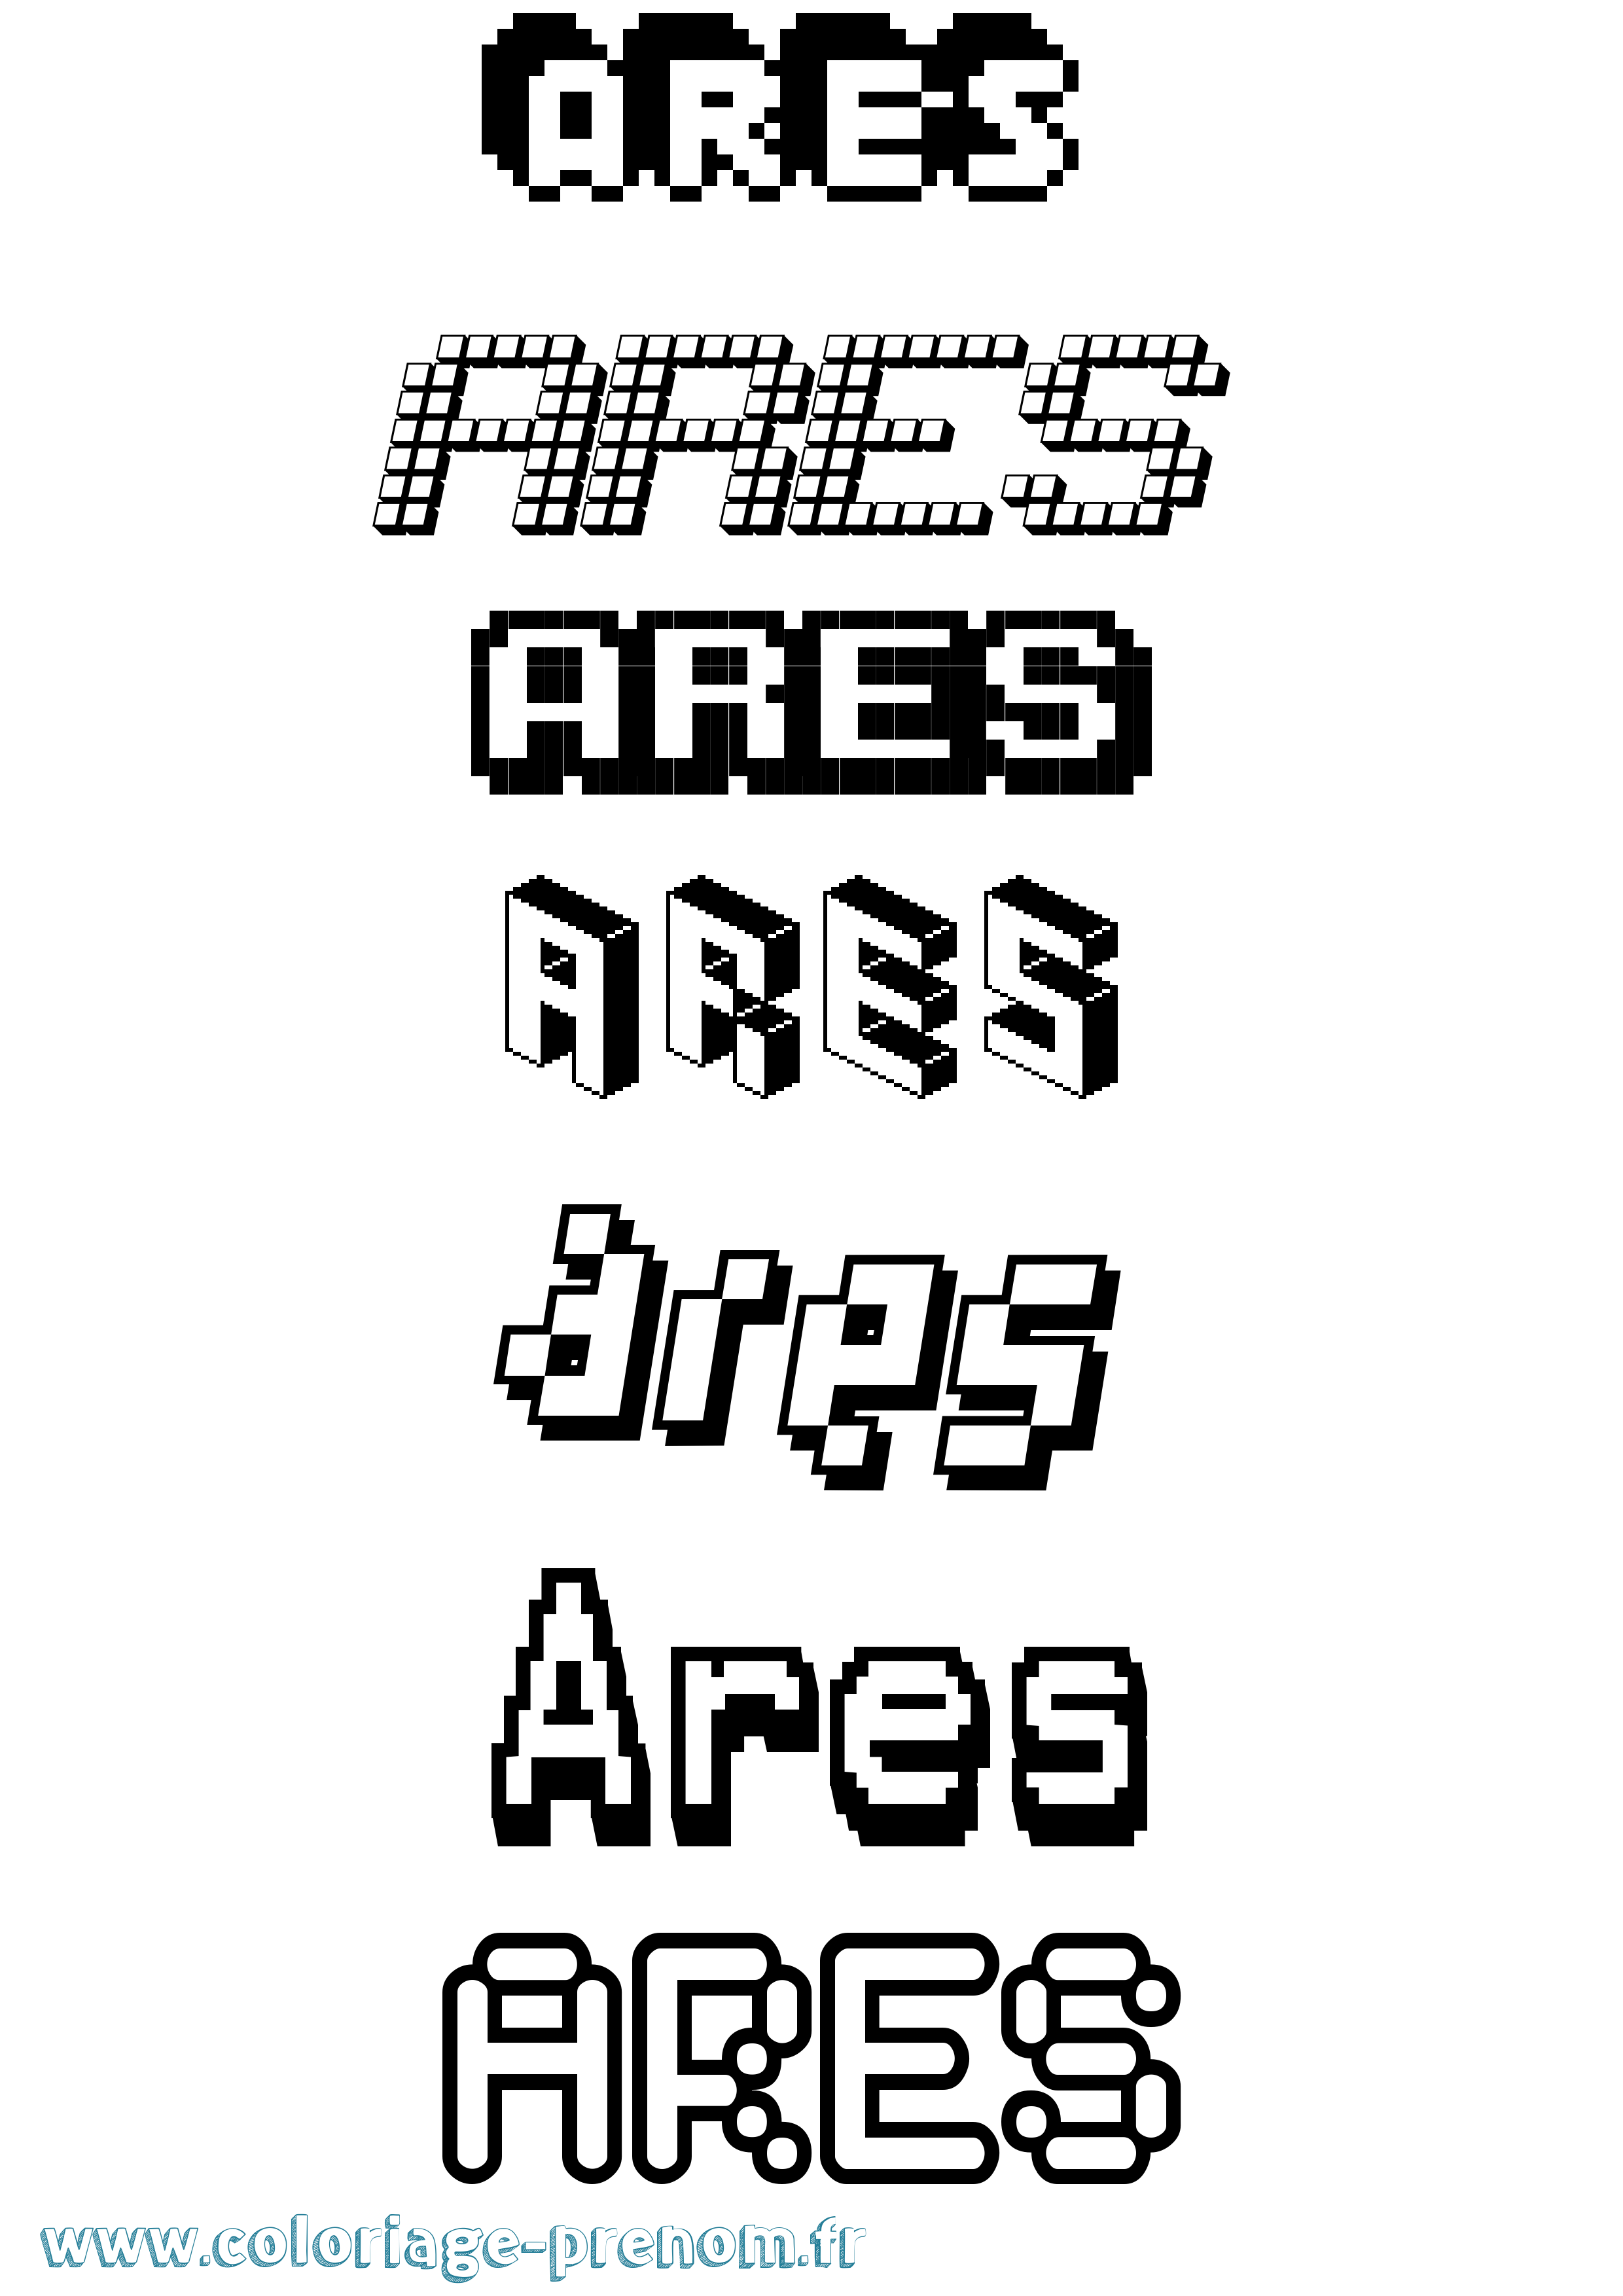 Coloriage prénom Ares Pixel